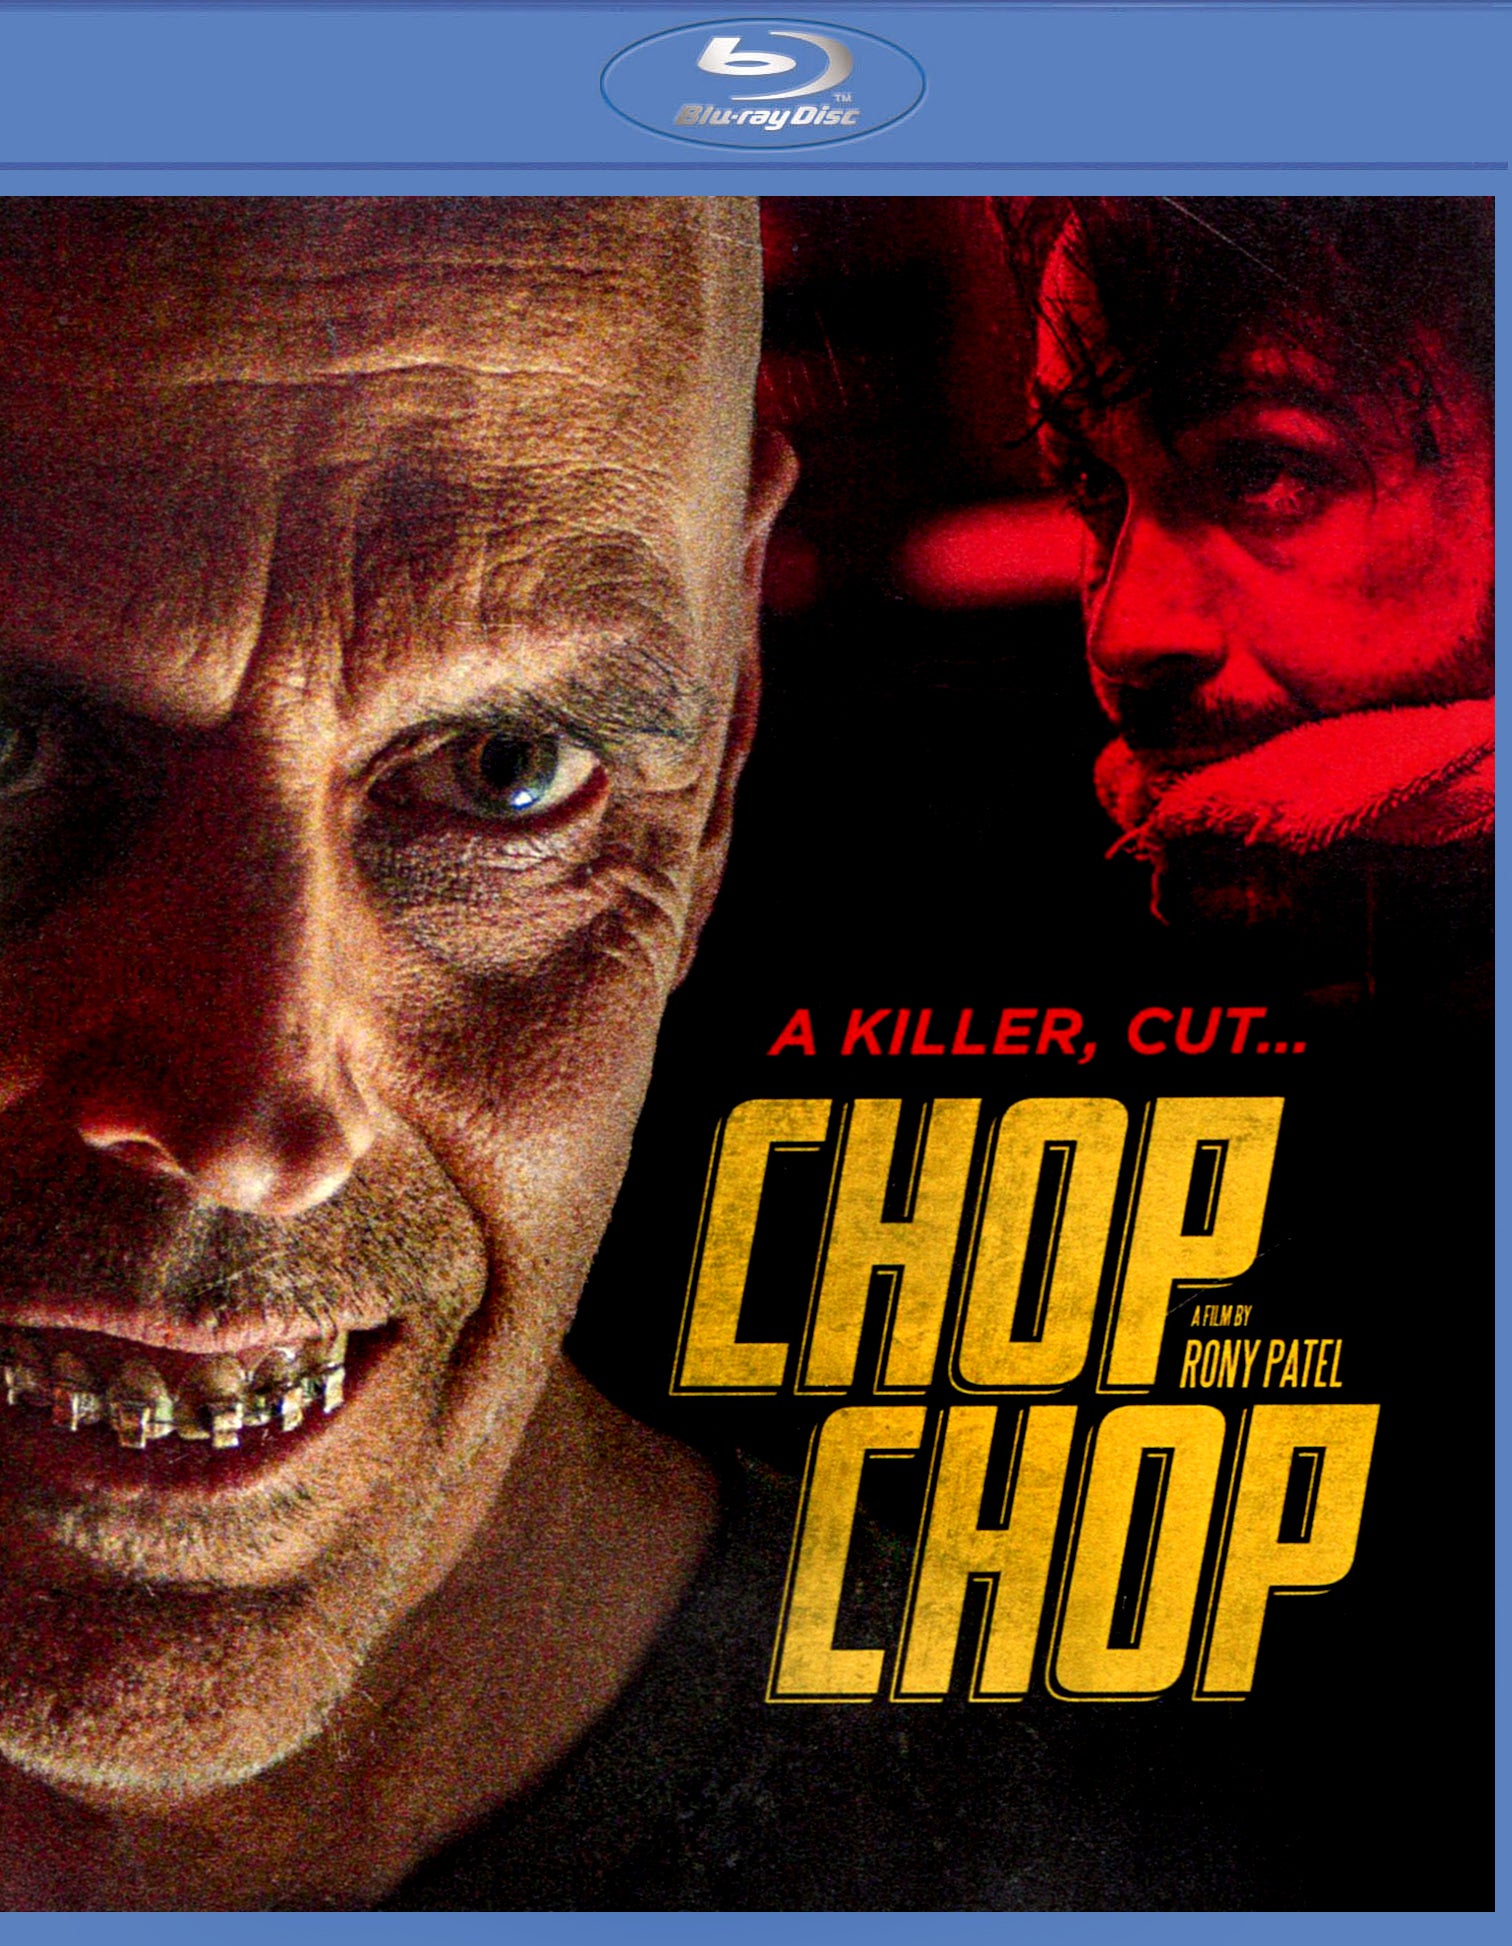 Chop Chop [Blu-ray] cover art